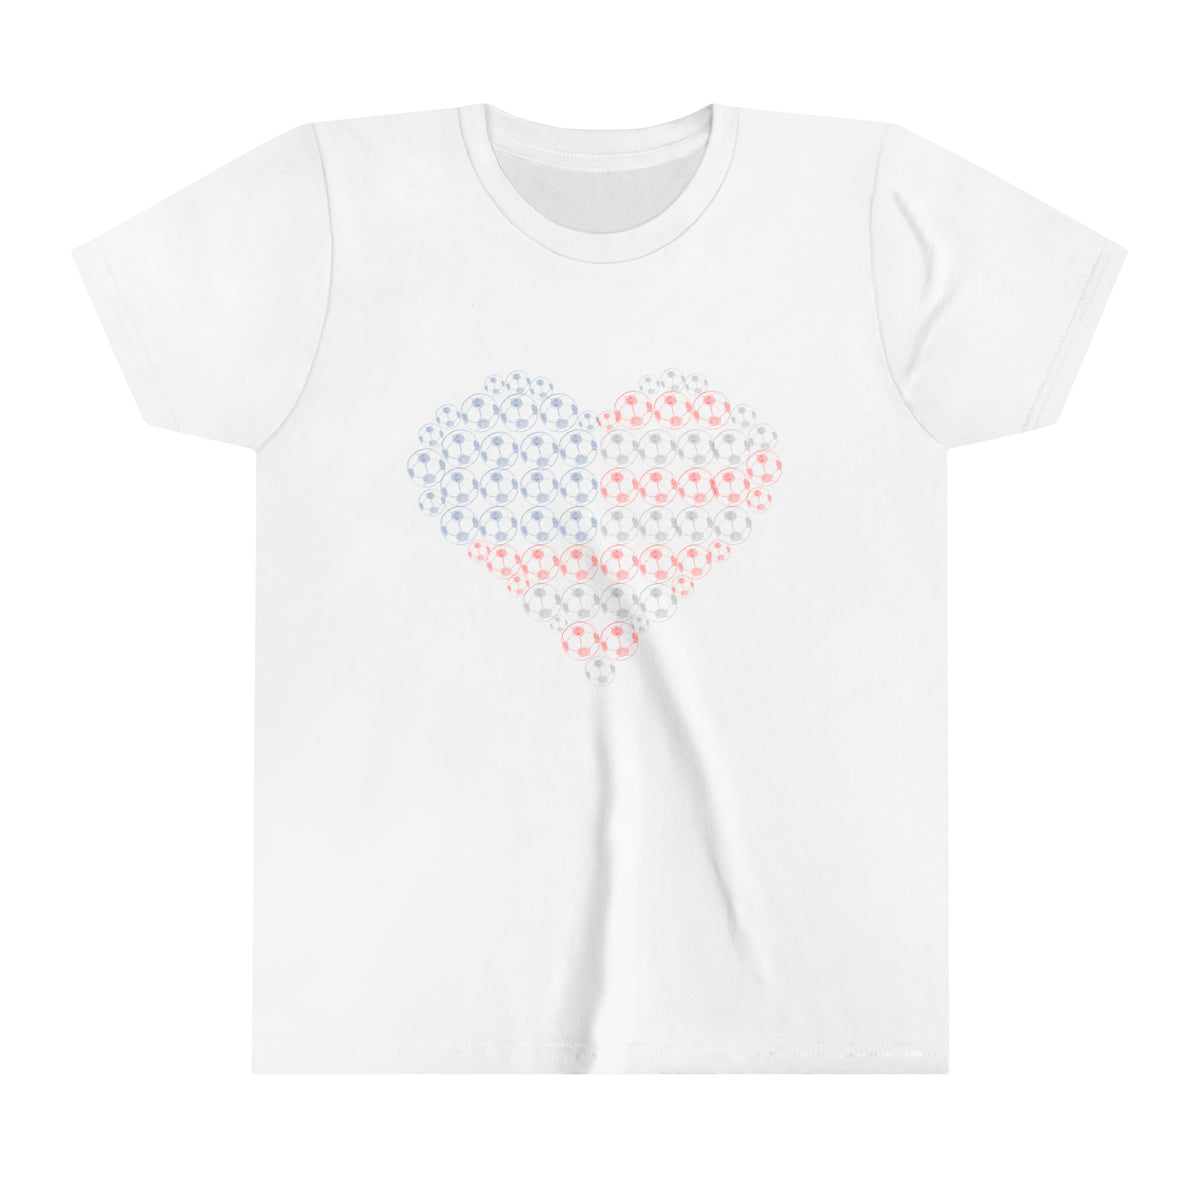 USA Soccer Ball Youth T-Shirt